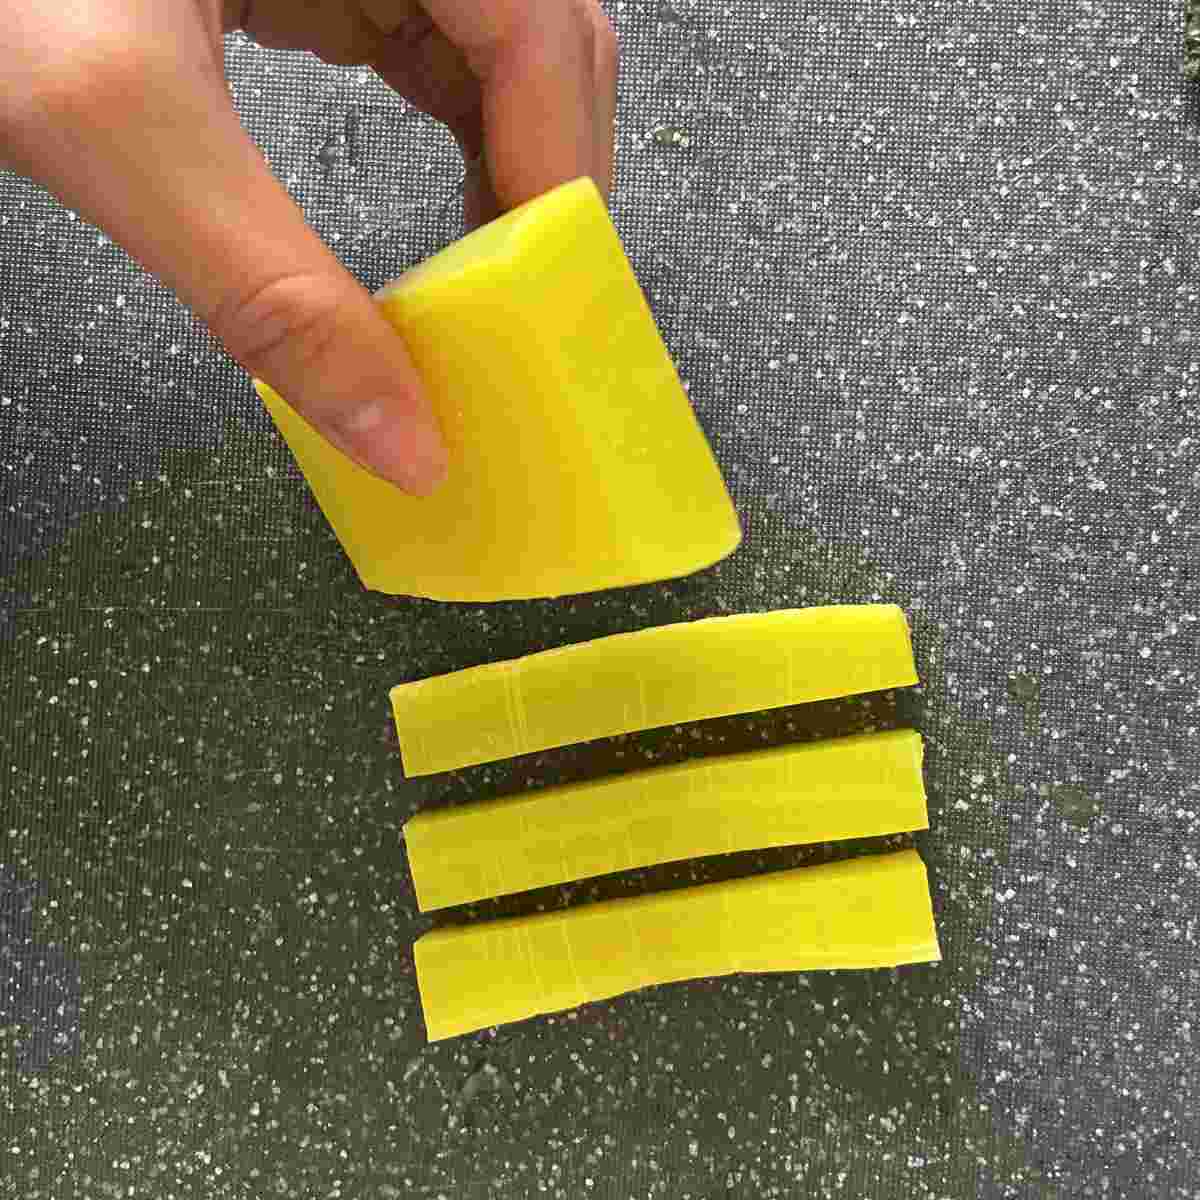 How to make yellow daikon